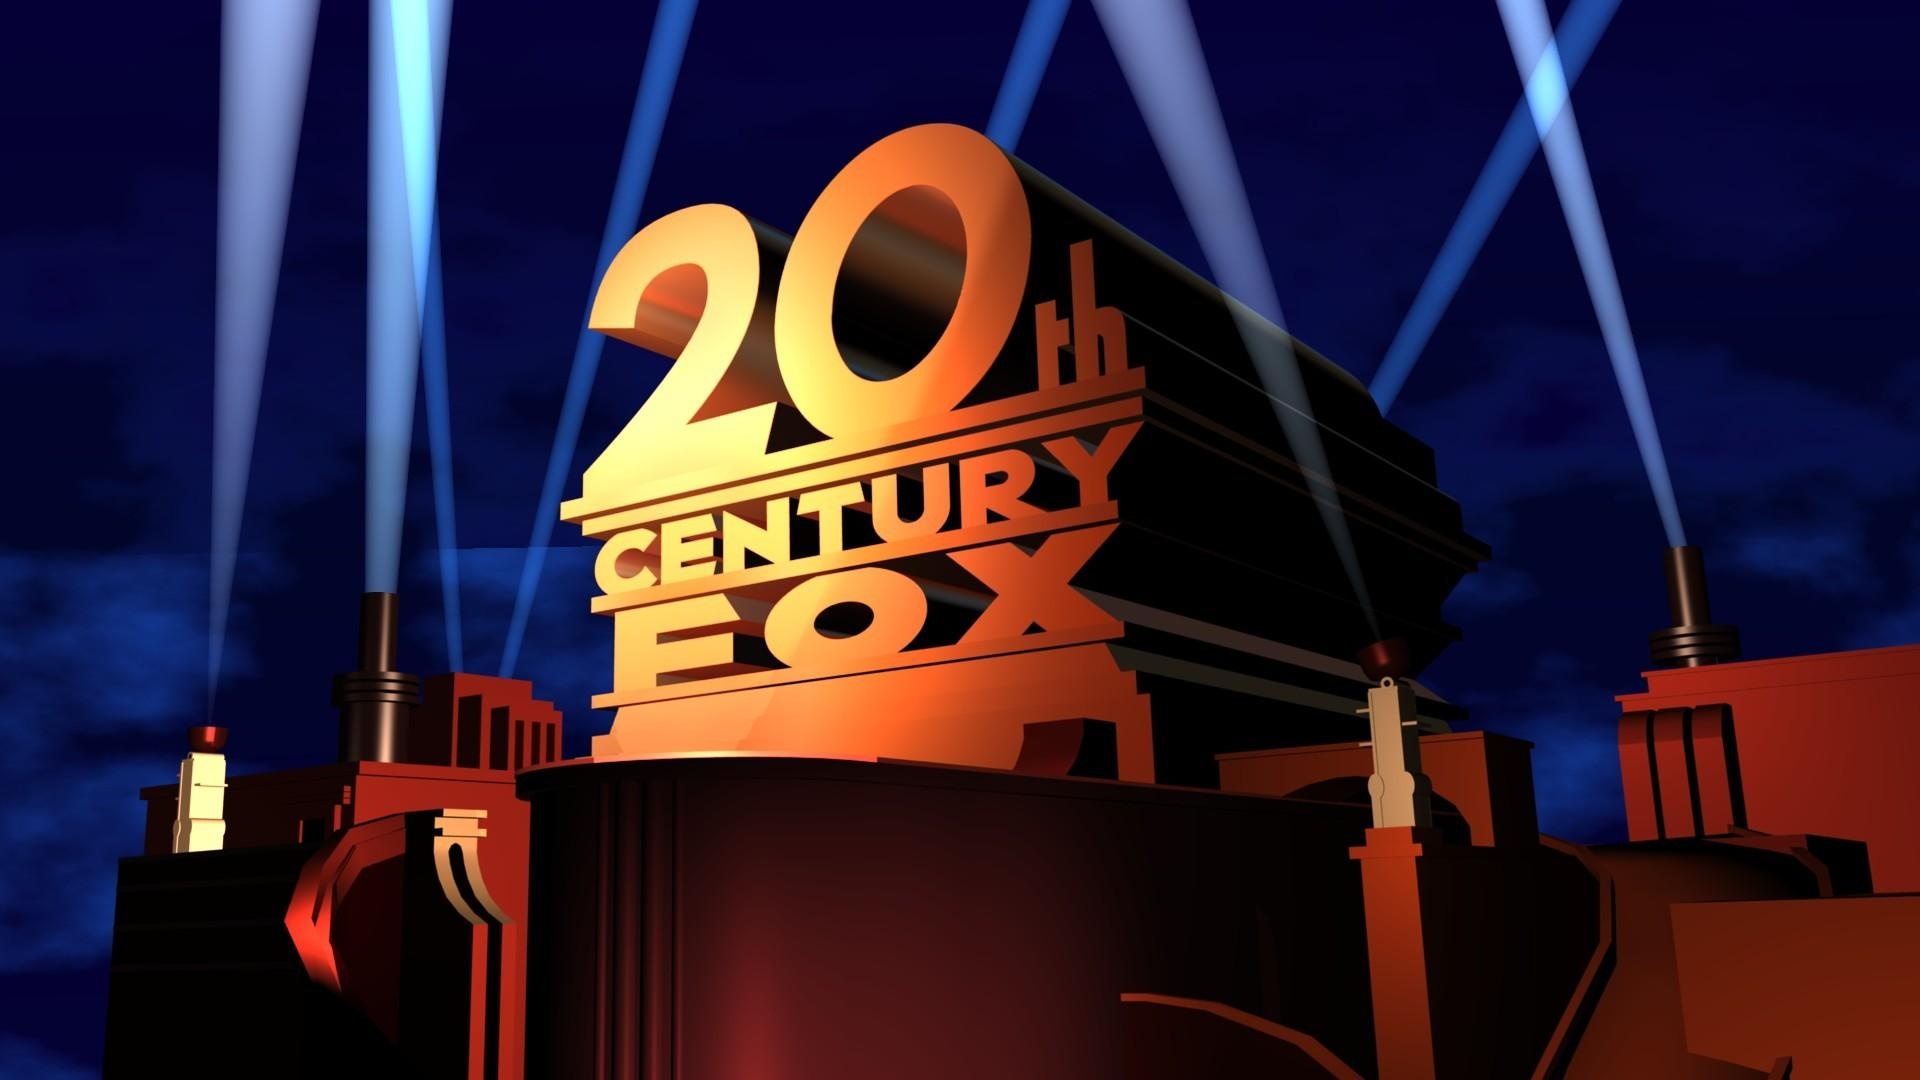 Заставка fox. 20 Век Центури Фокс. 20 Сенчури Фокс. Студия 20th Century Fox. 20th Century Fox СТС.